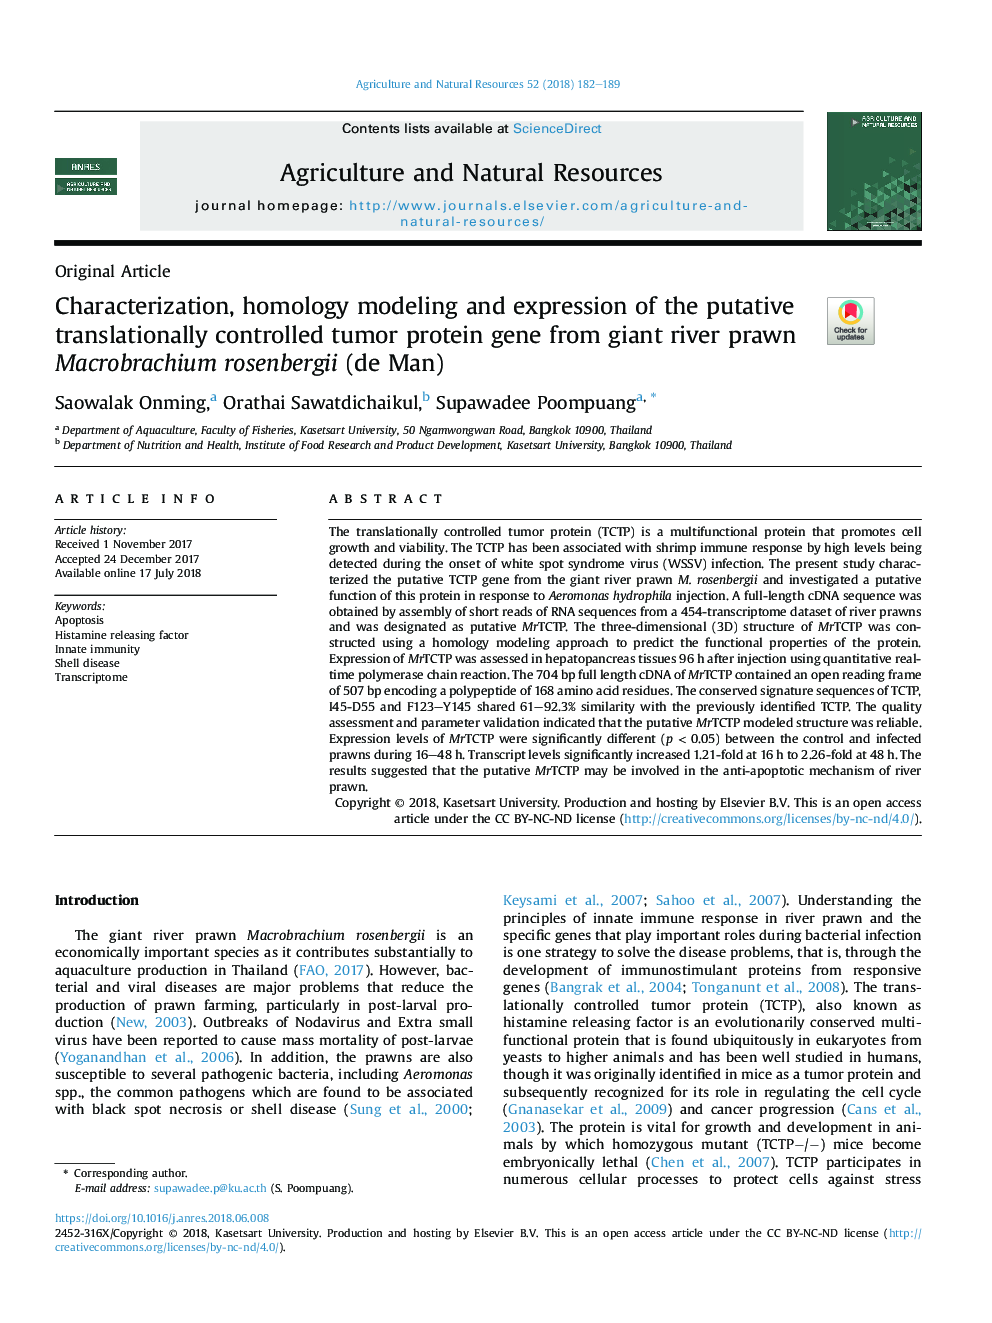 Characterization, homology modeling and expression of the putative translationally controlled tumor protein gene from giant river prawn Macrobrachium rosenbergii (de Man)